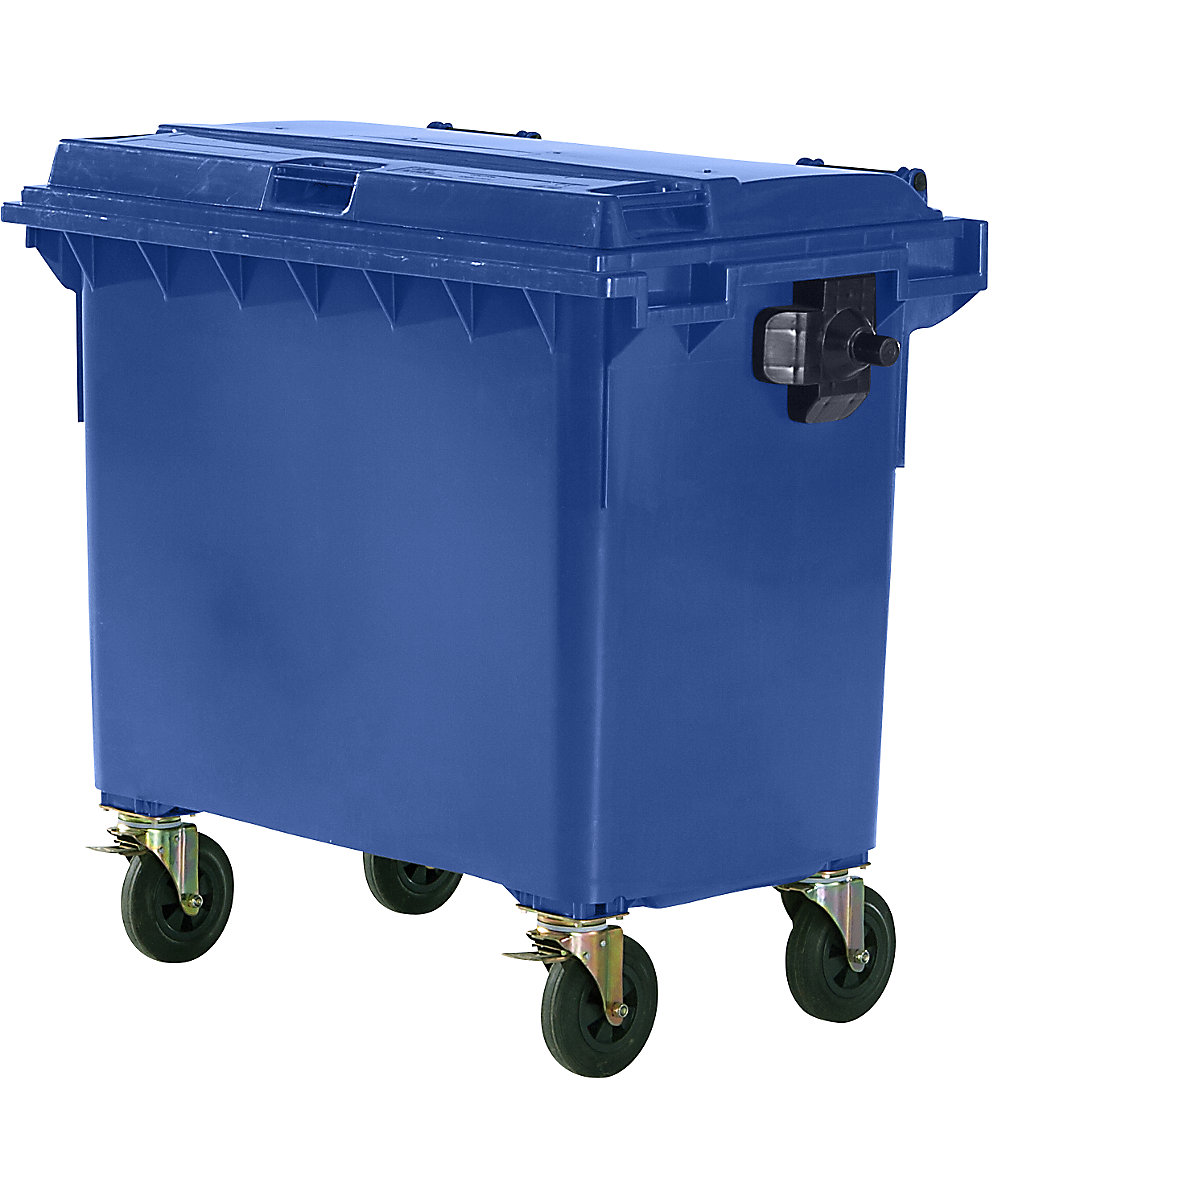 Contentor do lixo em plástico, DIN EN 840, volume 660 l, LxAxP 1360 x 1235 x 765 mm, azul-5